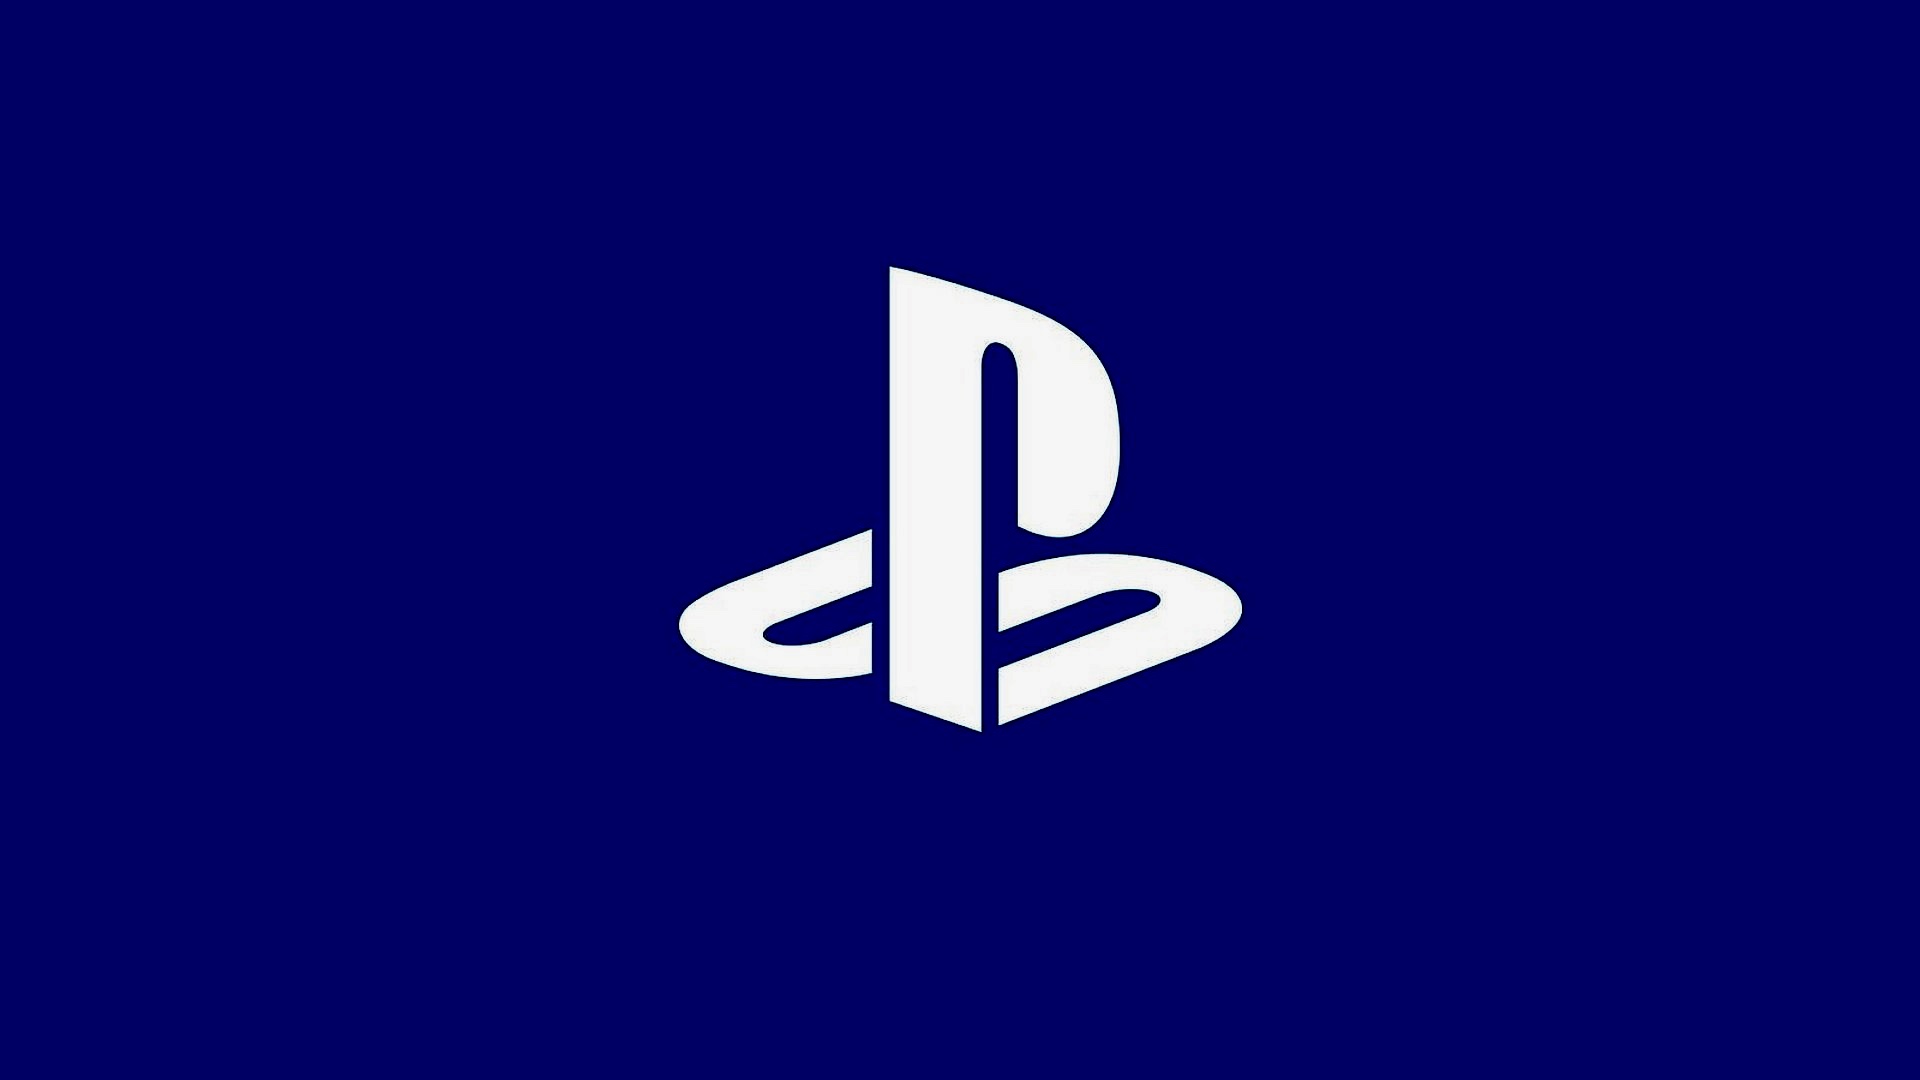 Sony သည် နောက်ထပ် First Party Games ကို Pc သို့ ယူဆောင်လာစေရန် “စူးစမ်း” မည်ဖြစ်သည်။